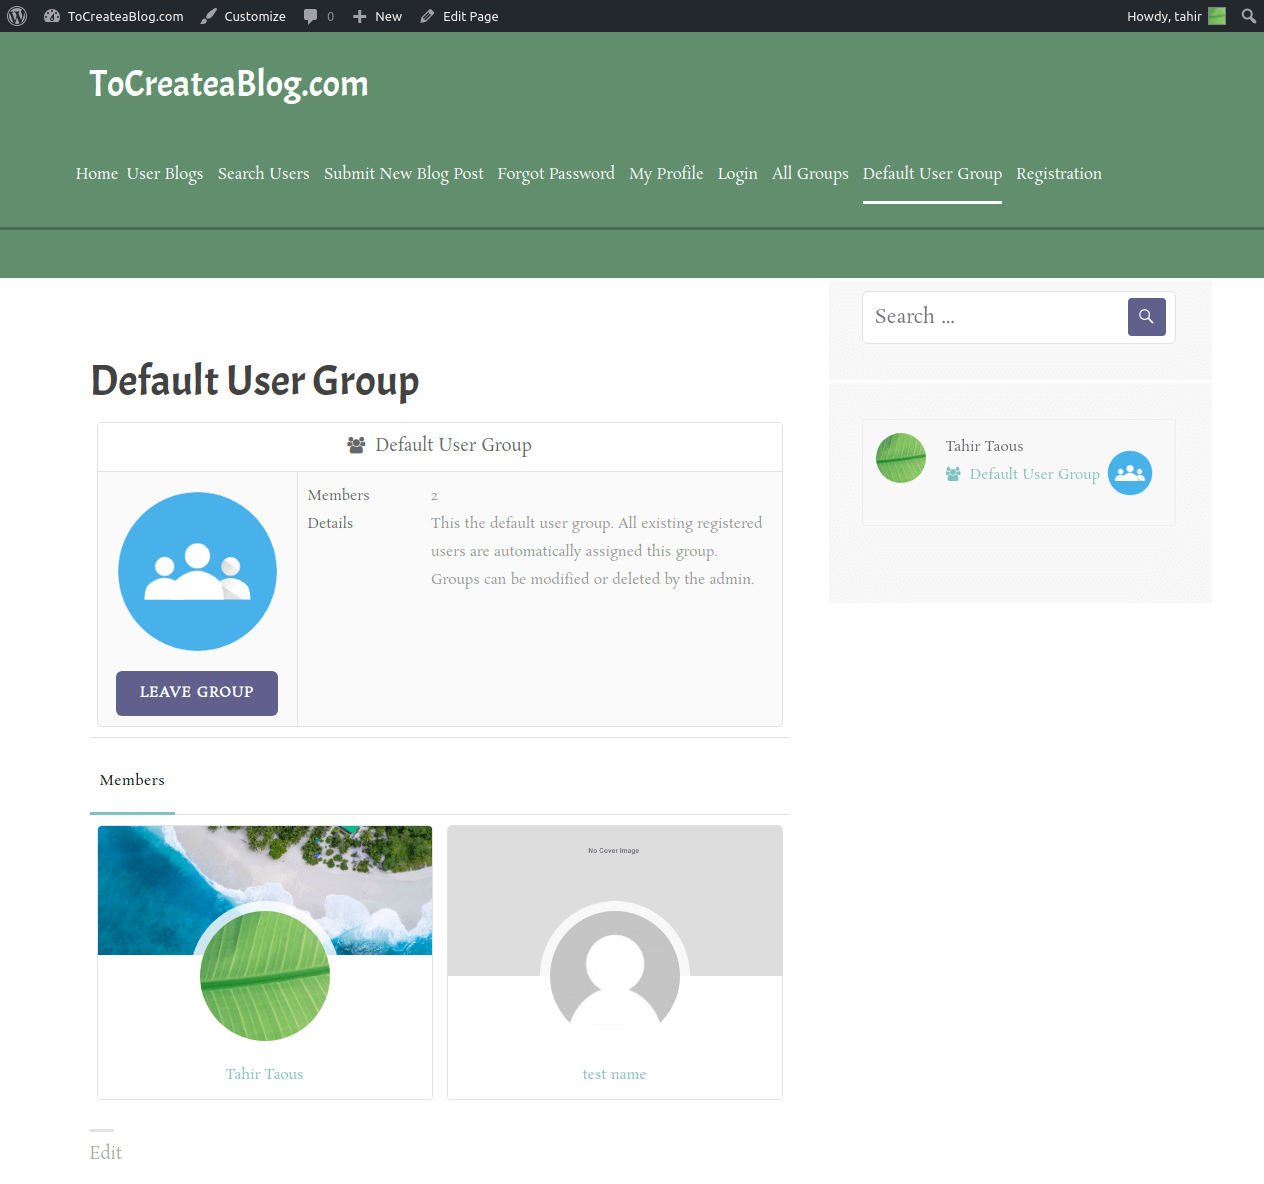 Default User Group page ProfileGrid